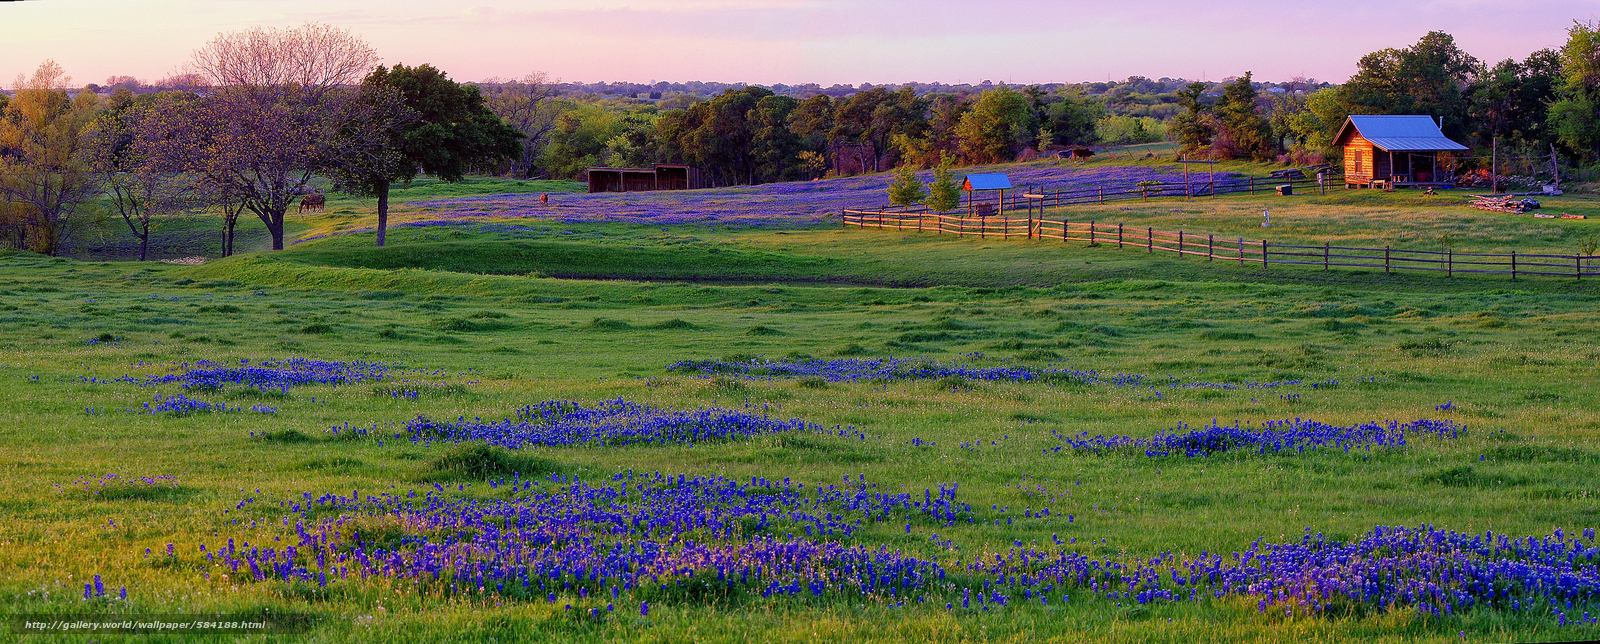 Texas Landscape Desktop Wallpaper - WallpaperSafari